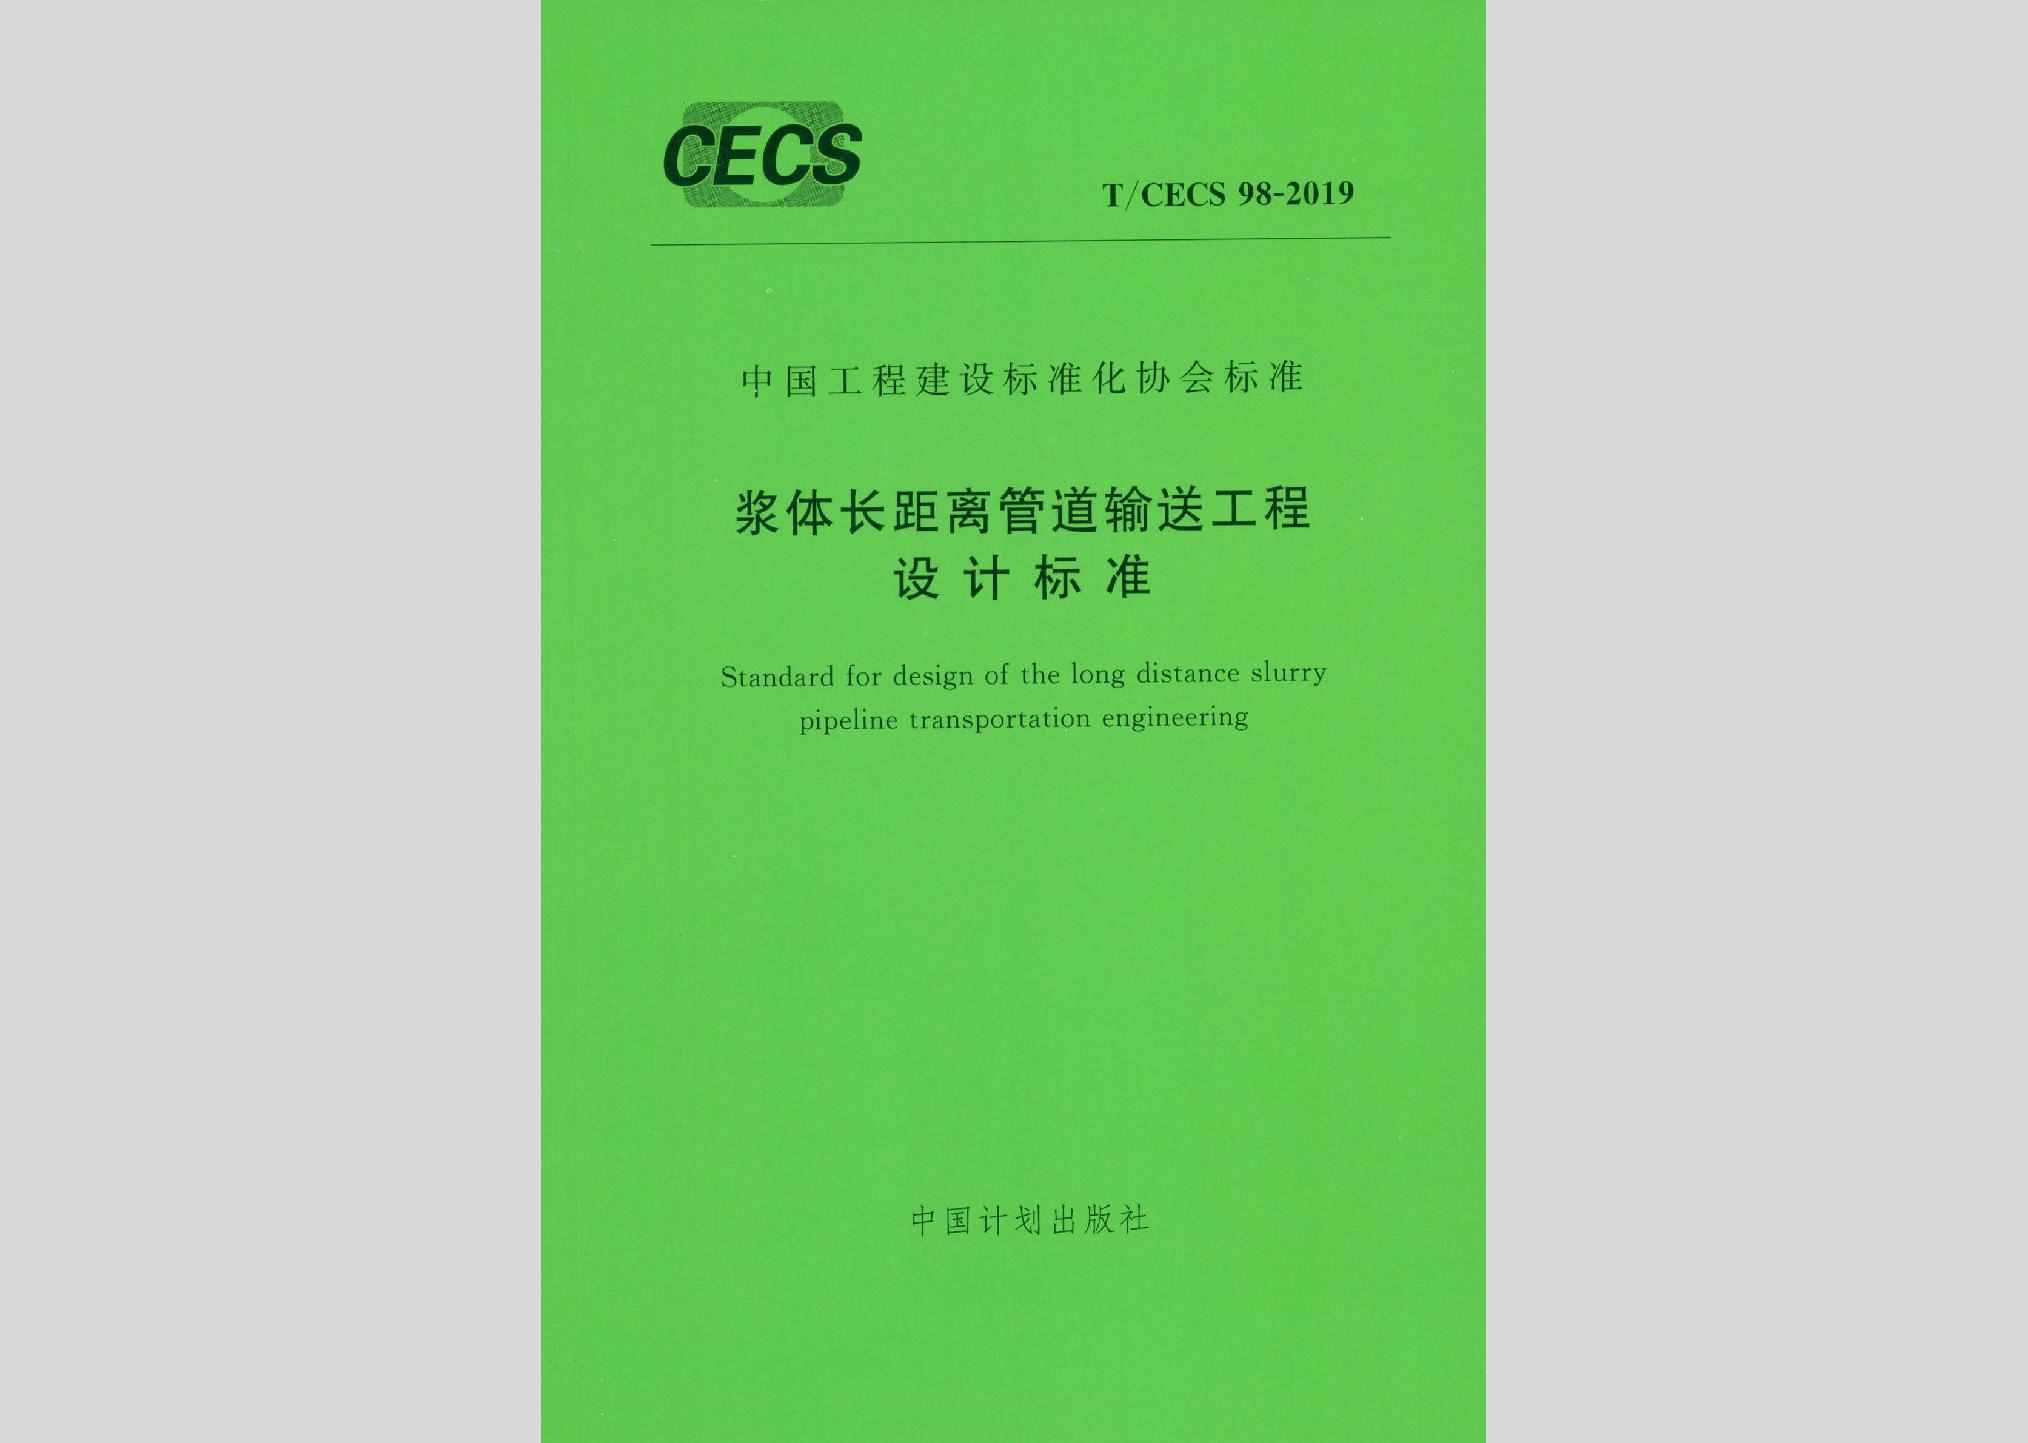 T/CECS98-2019：浆体长距离管道输送工程设计标准